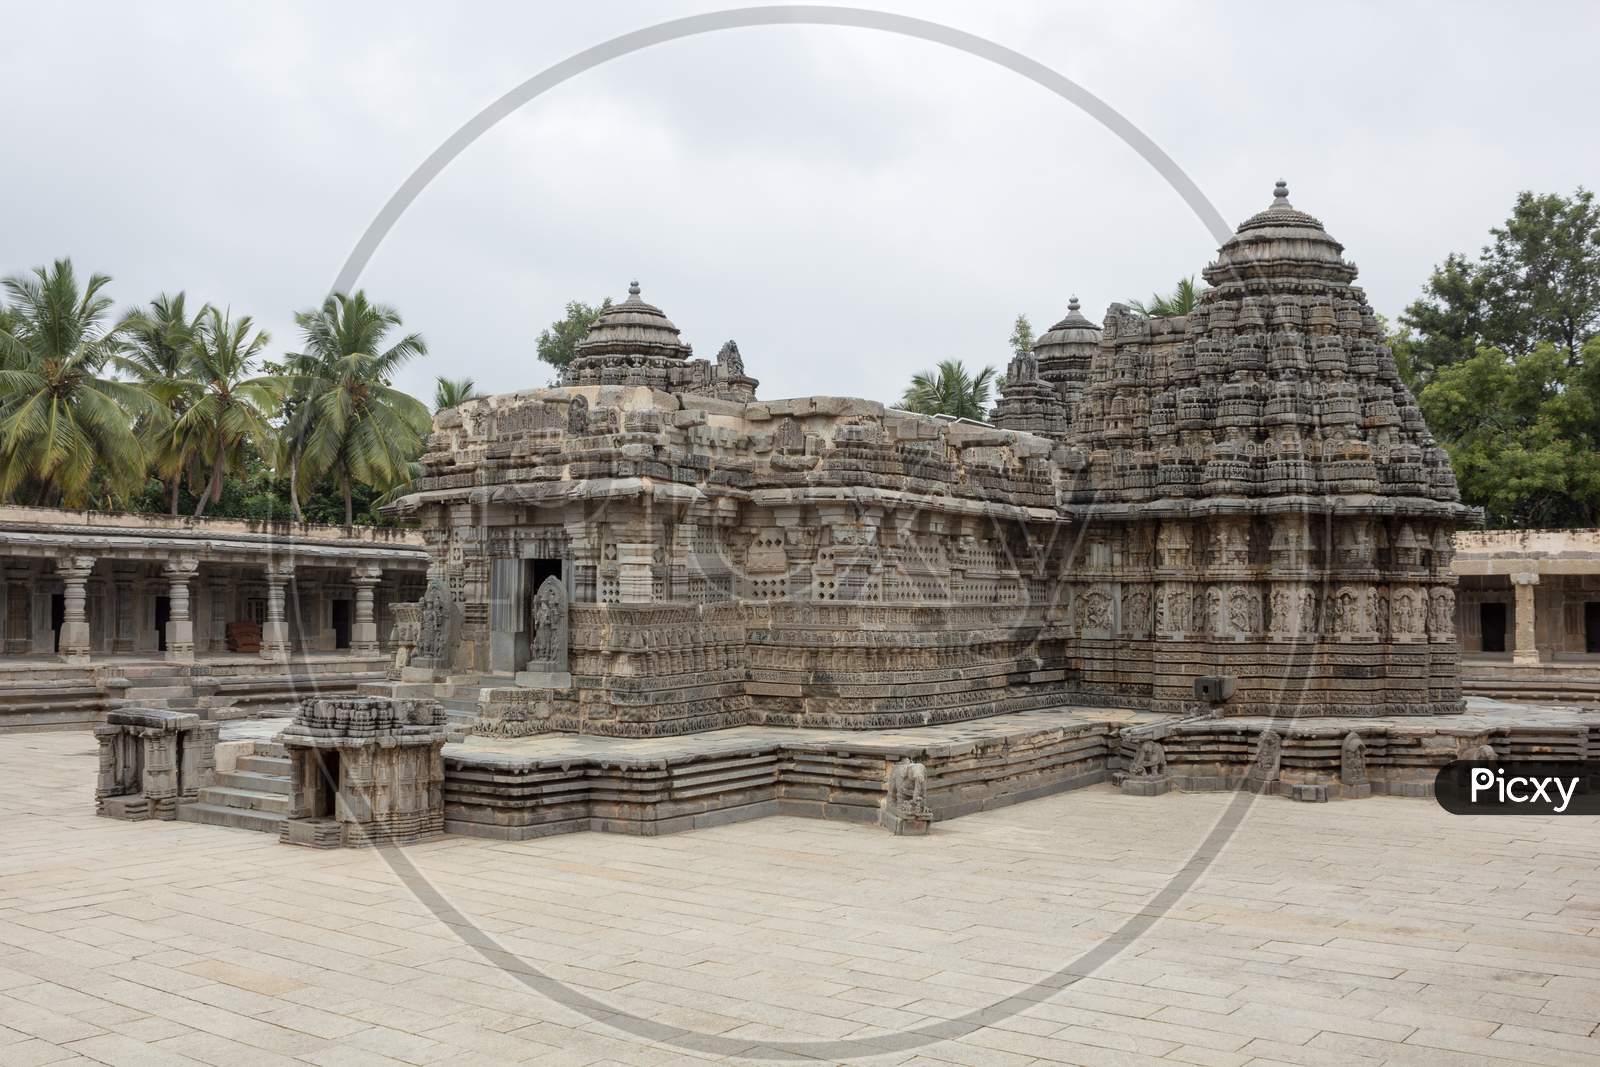 Keshava temple at Somanathapura in Karnataka/India.